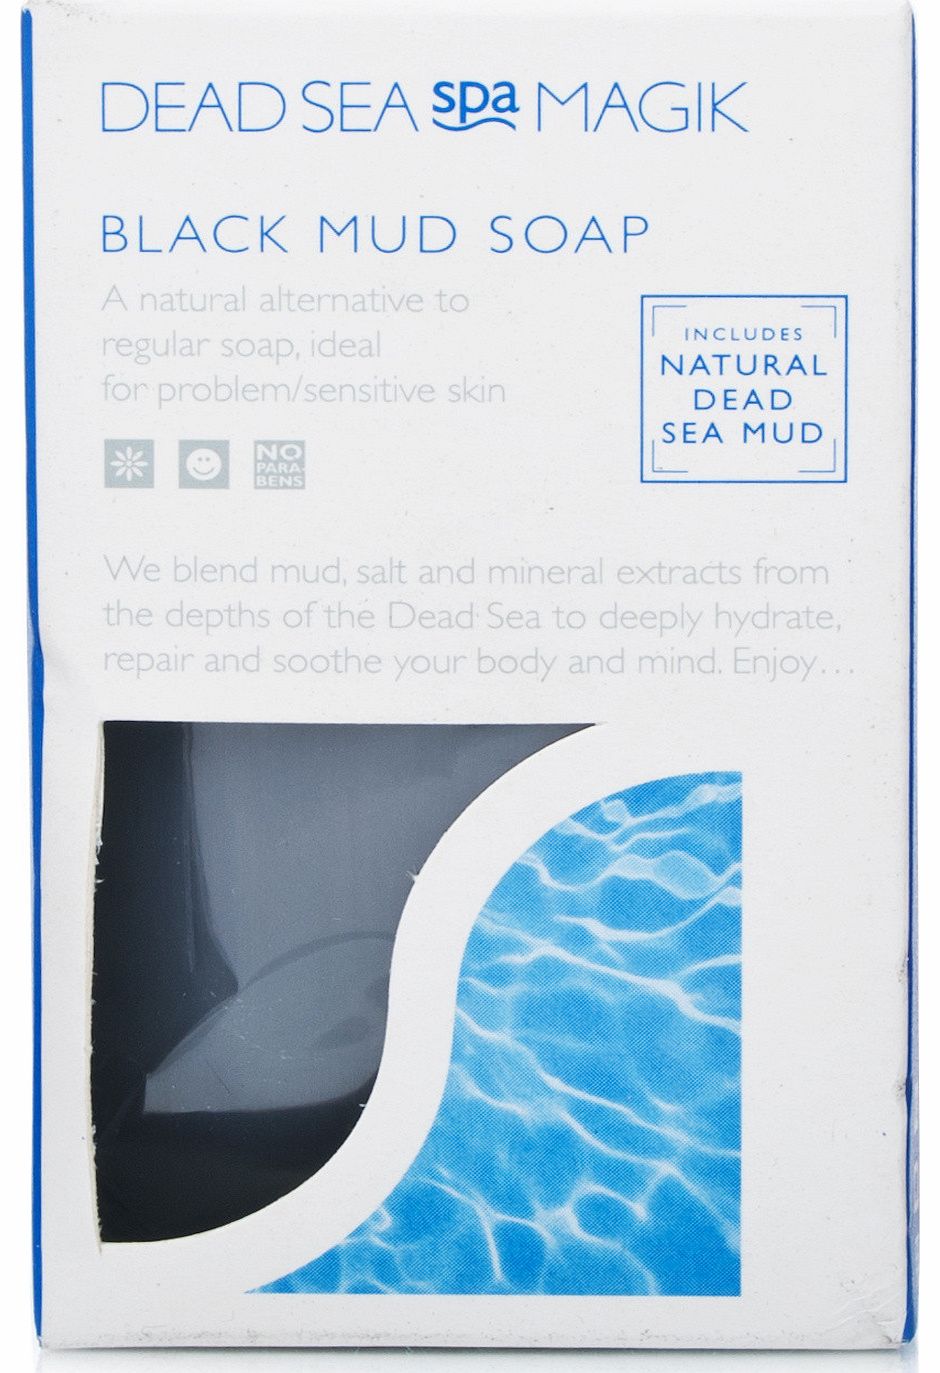 Dead Sea Spa Magik Black Mud Soap